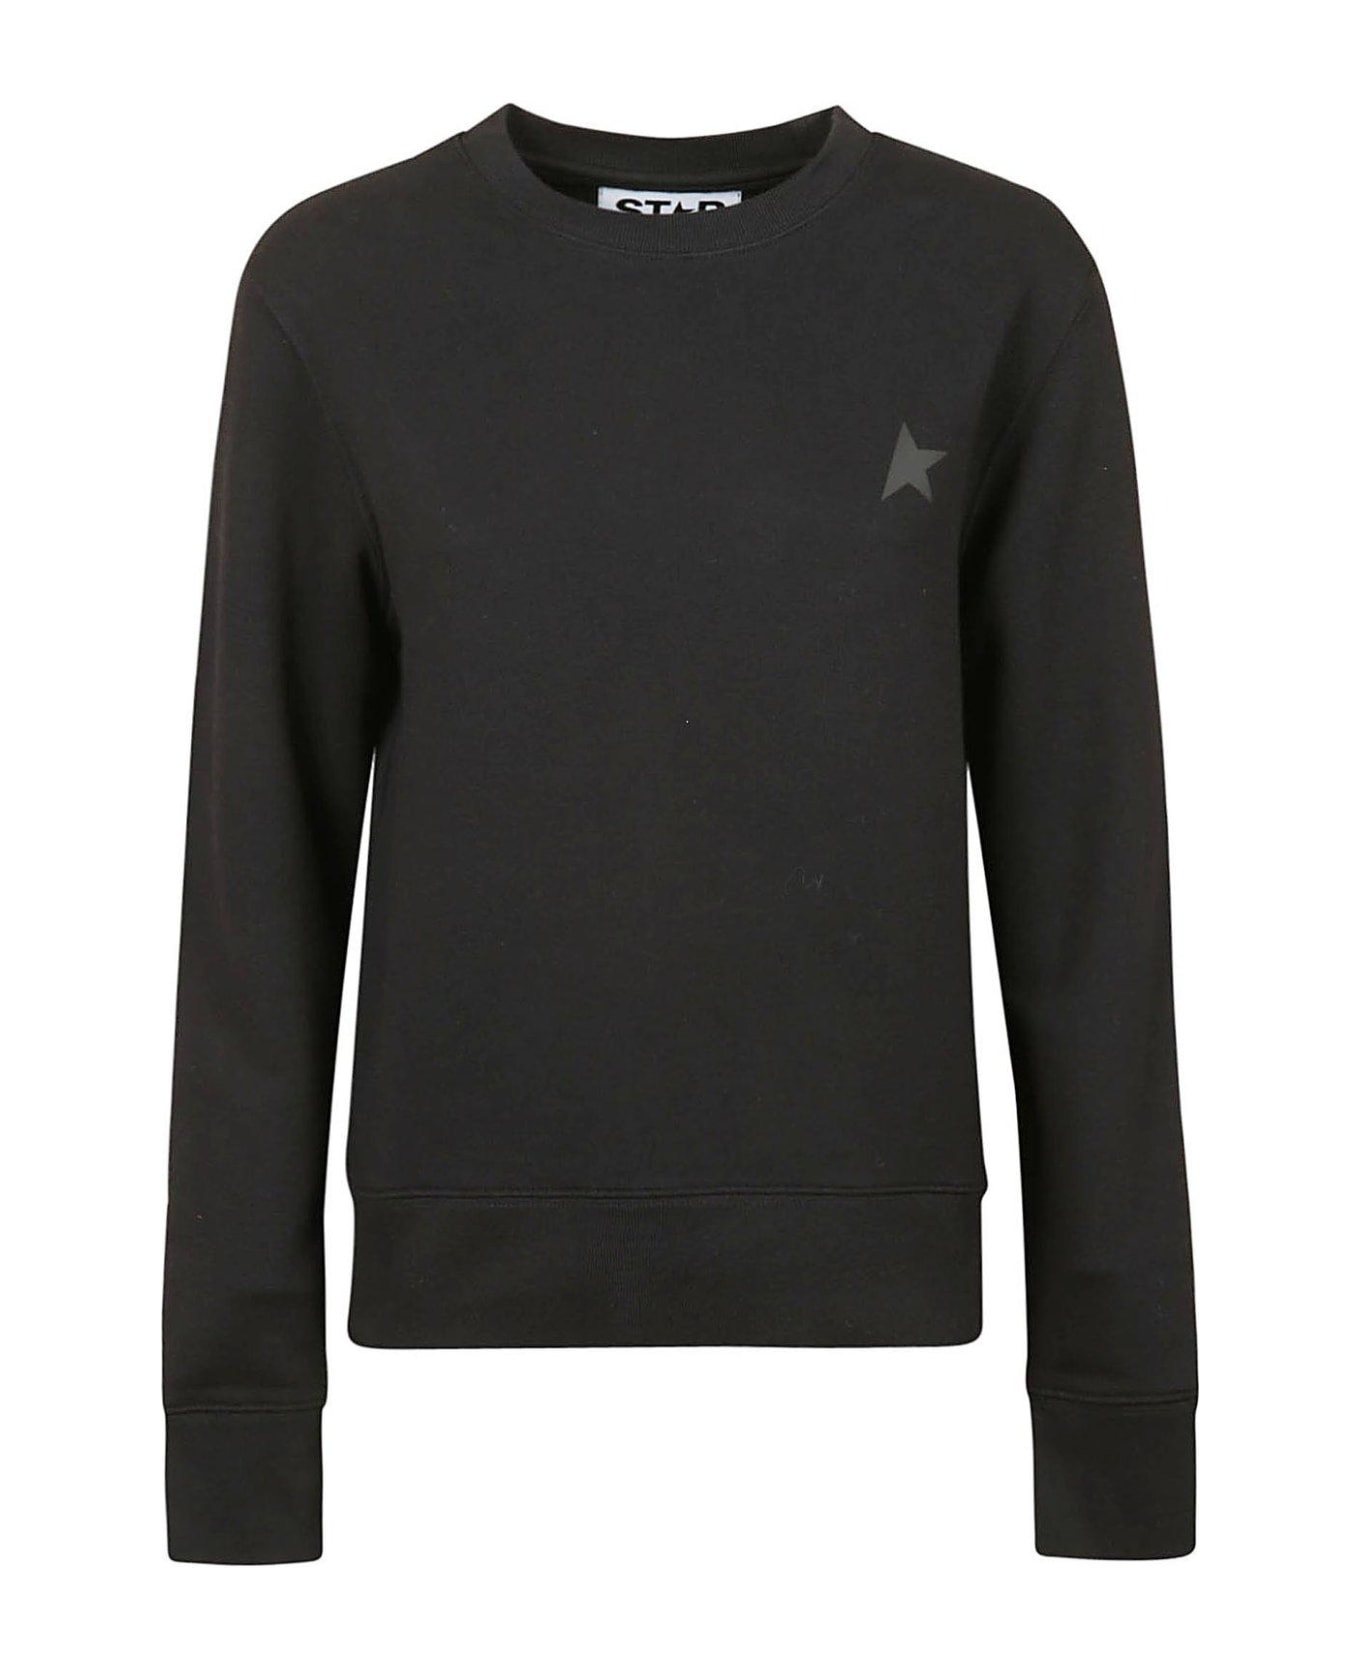 Golden Goose Star Printed Crewneck Sweatshirt - Black